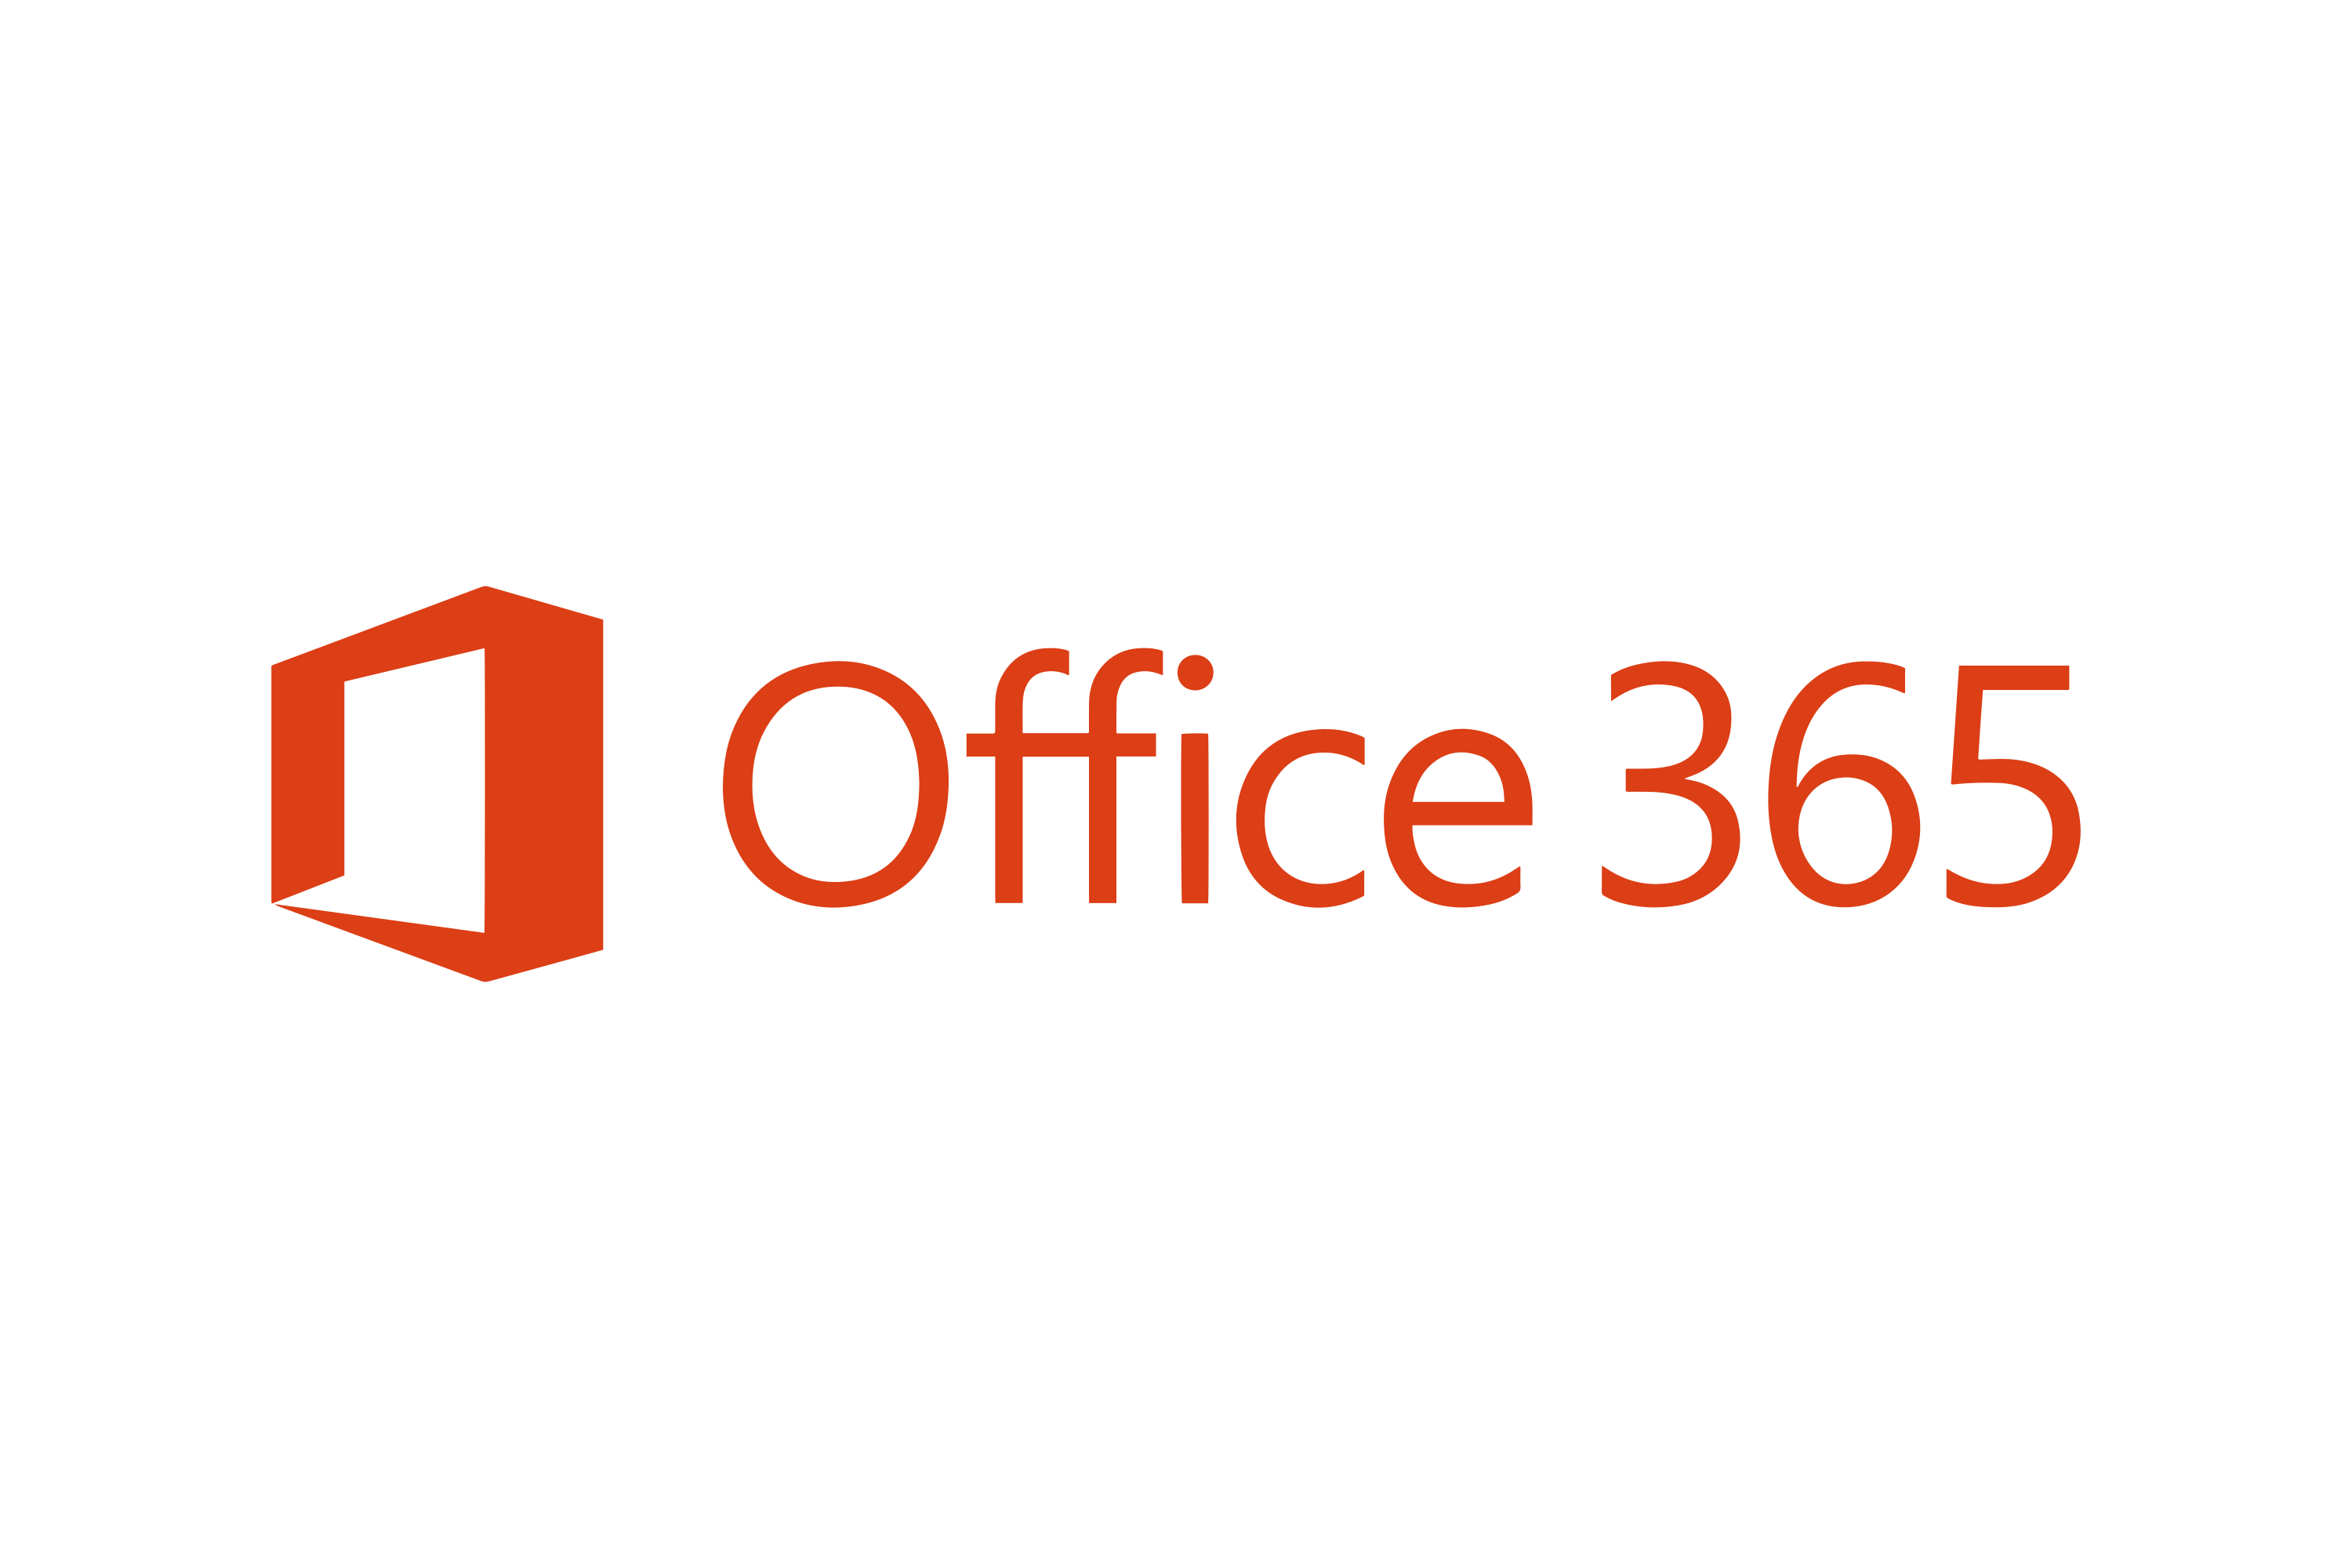 Office365 Logo